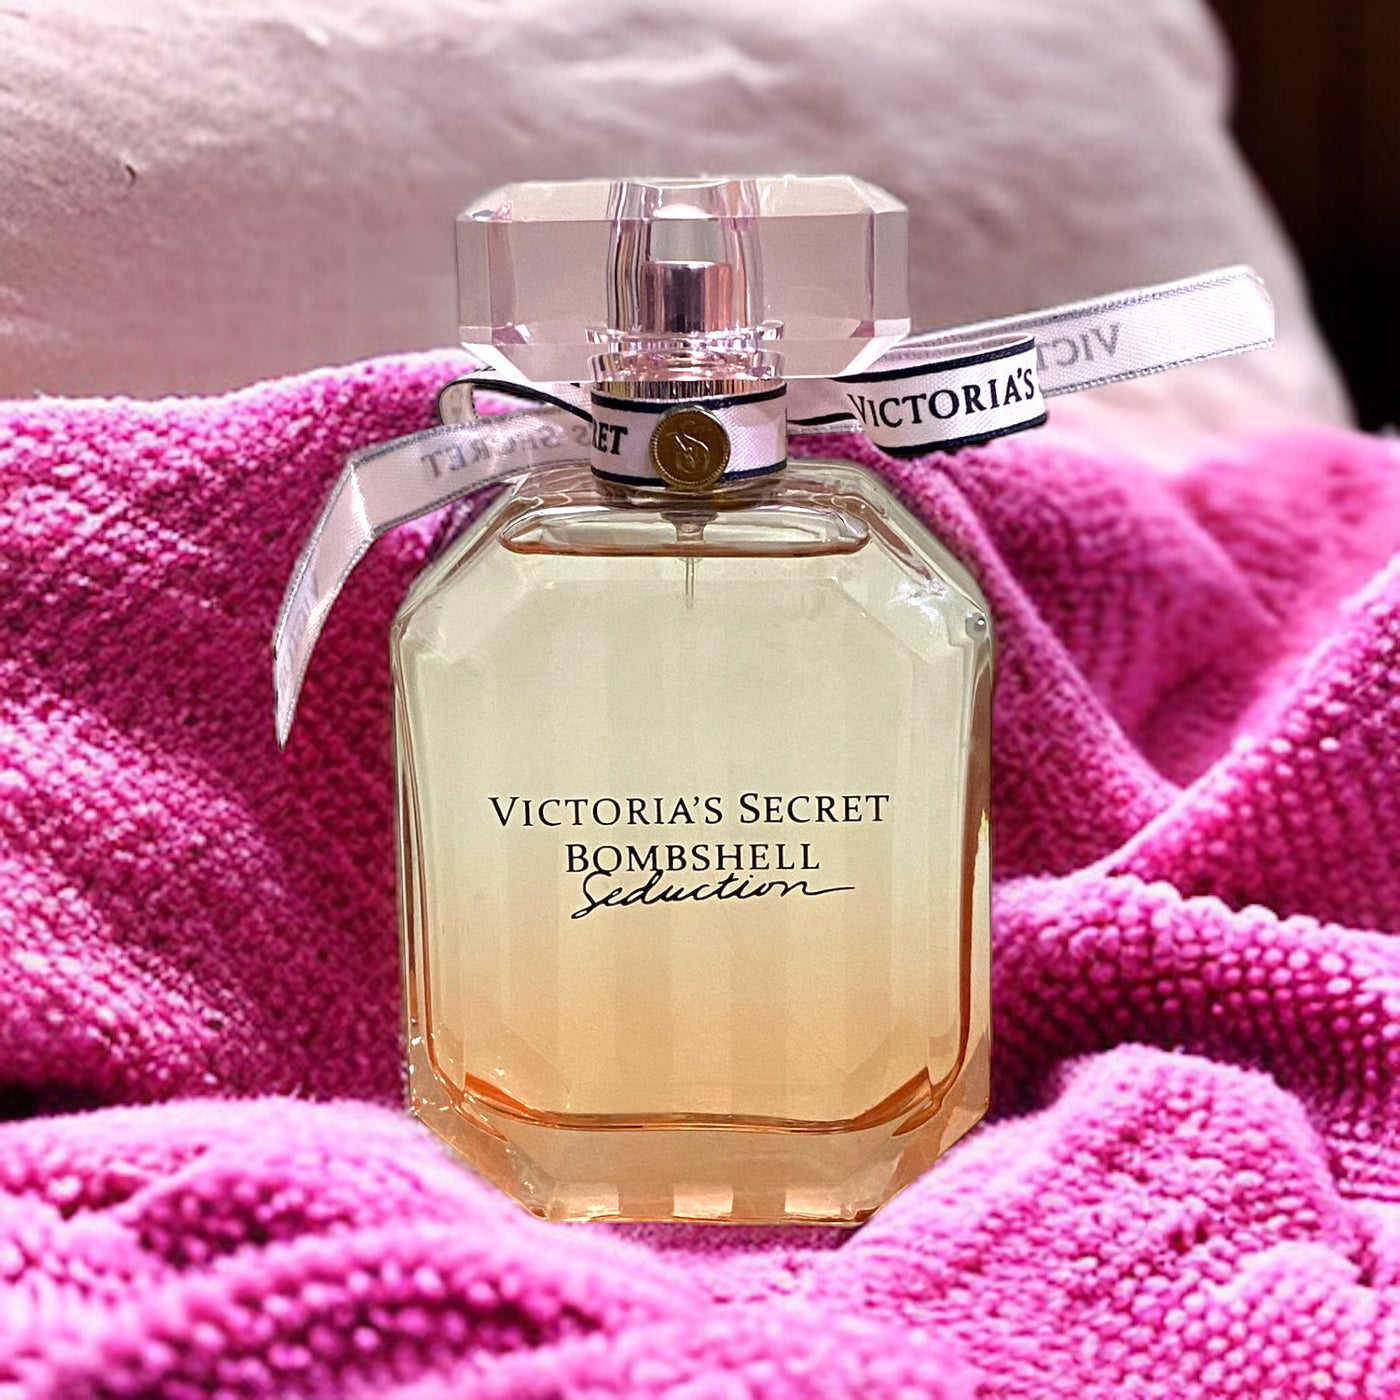 VICTORIA’S SECRET BOMBSHELL Seduction Tester Perfume